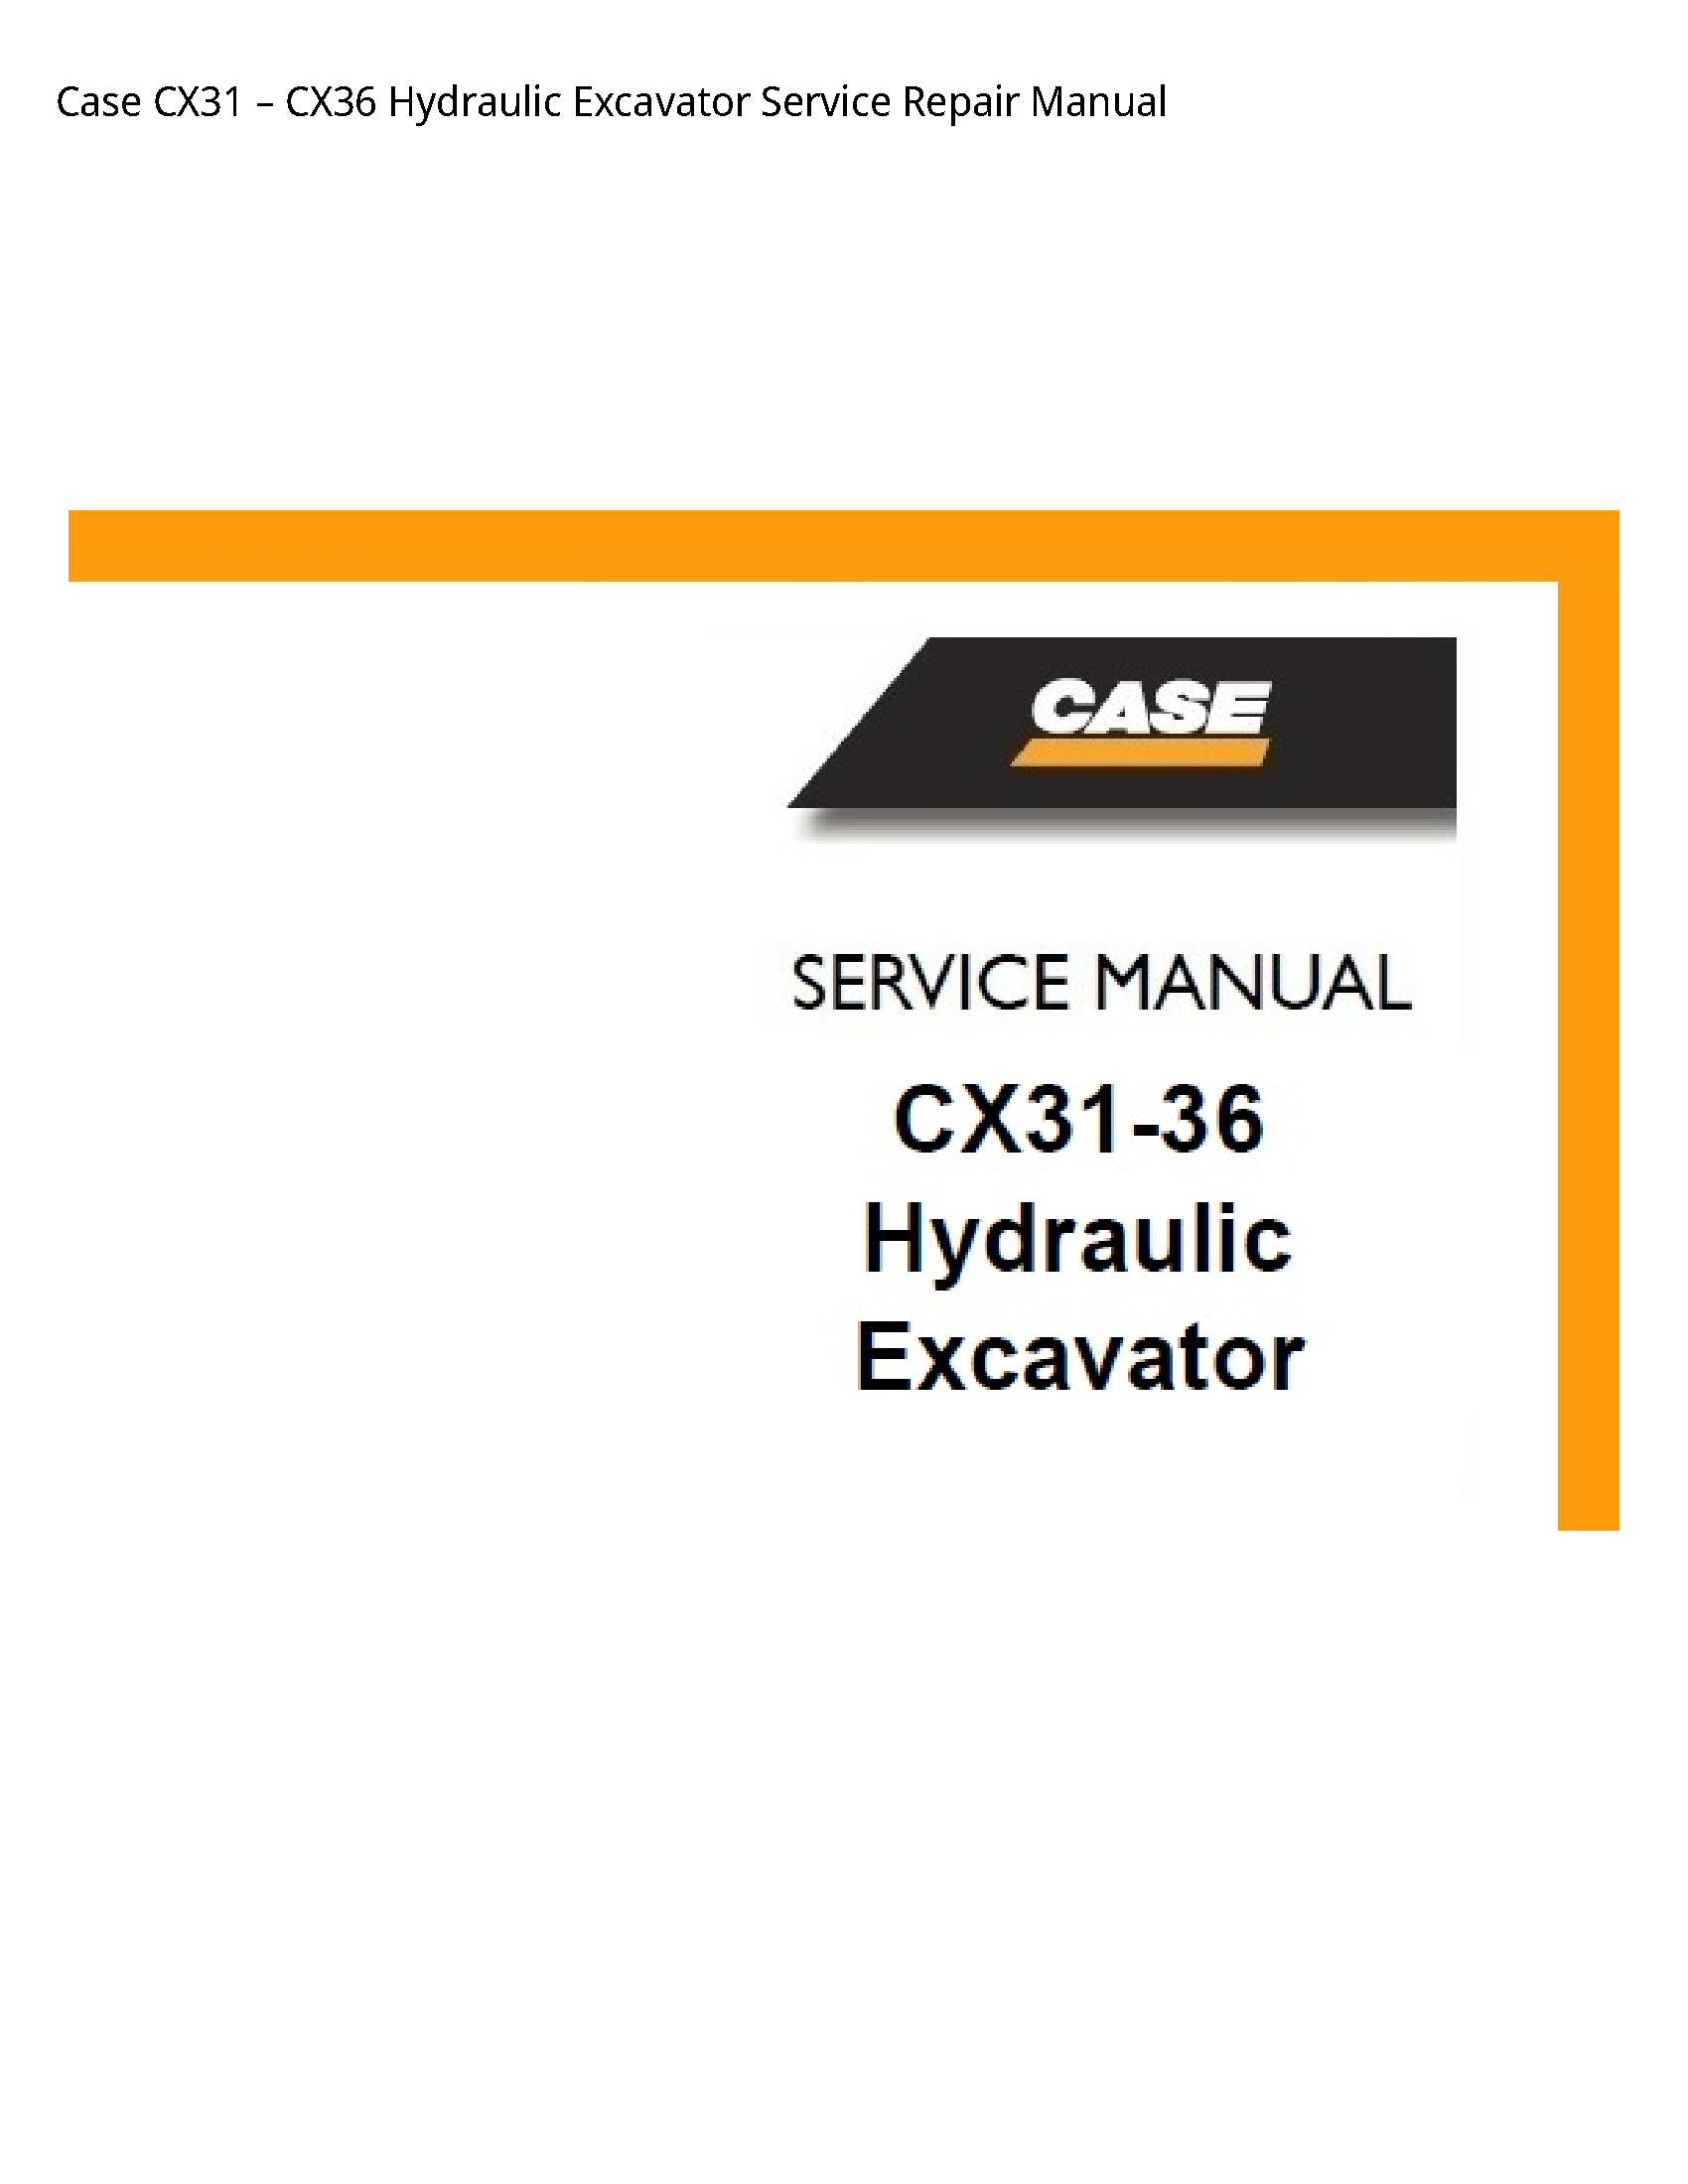 Case/Case IH CX31 Hydraulic Excavator manual